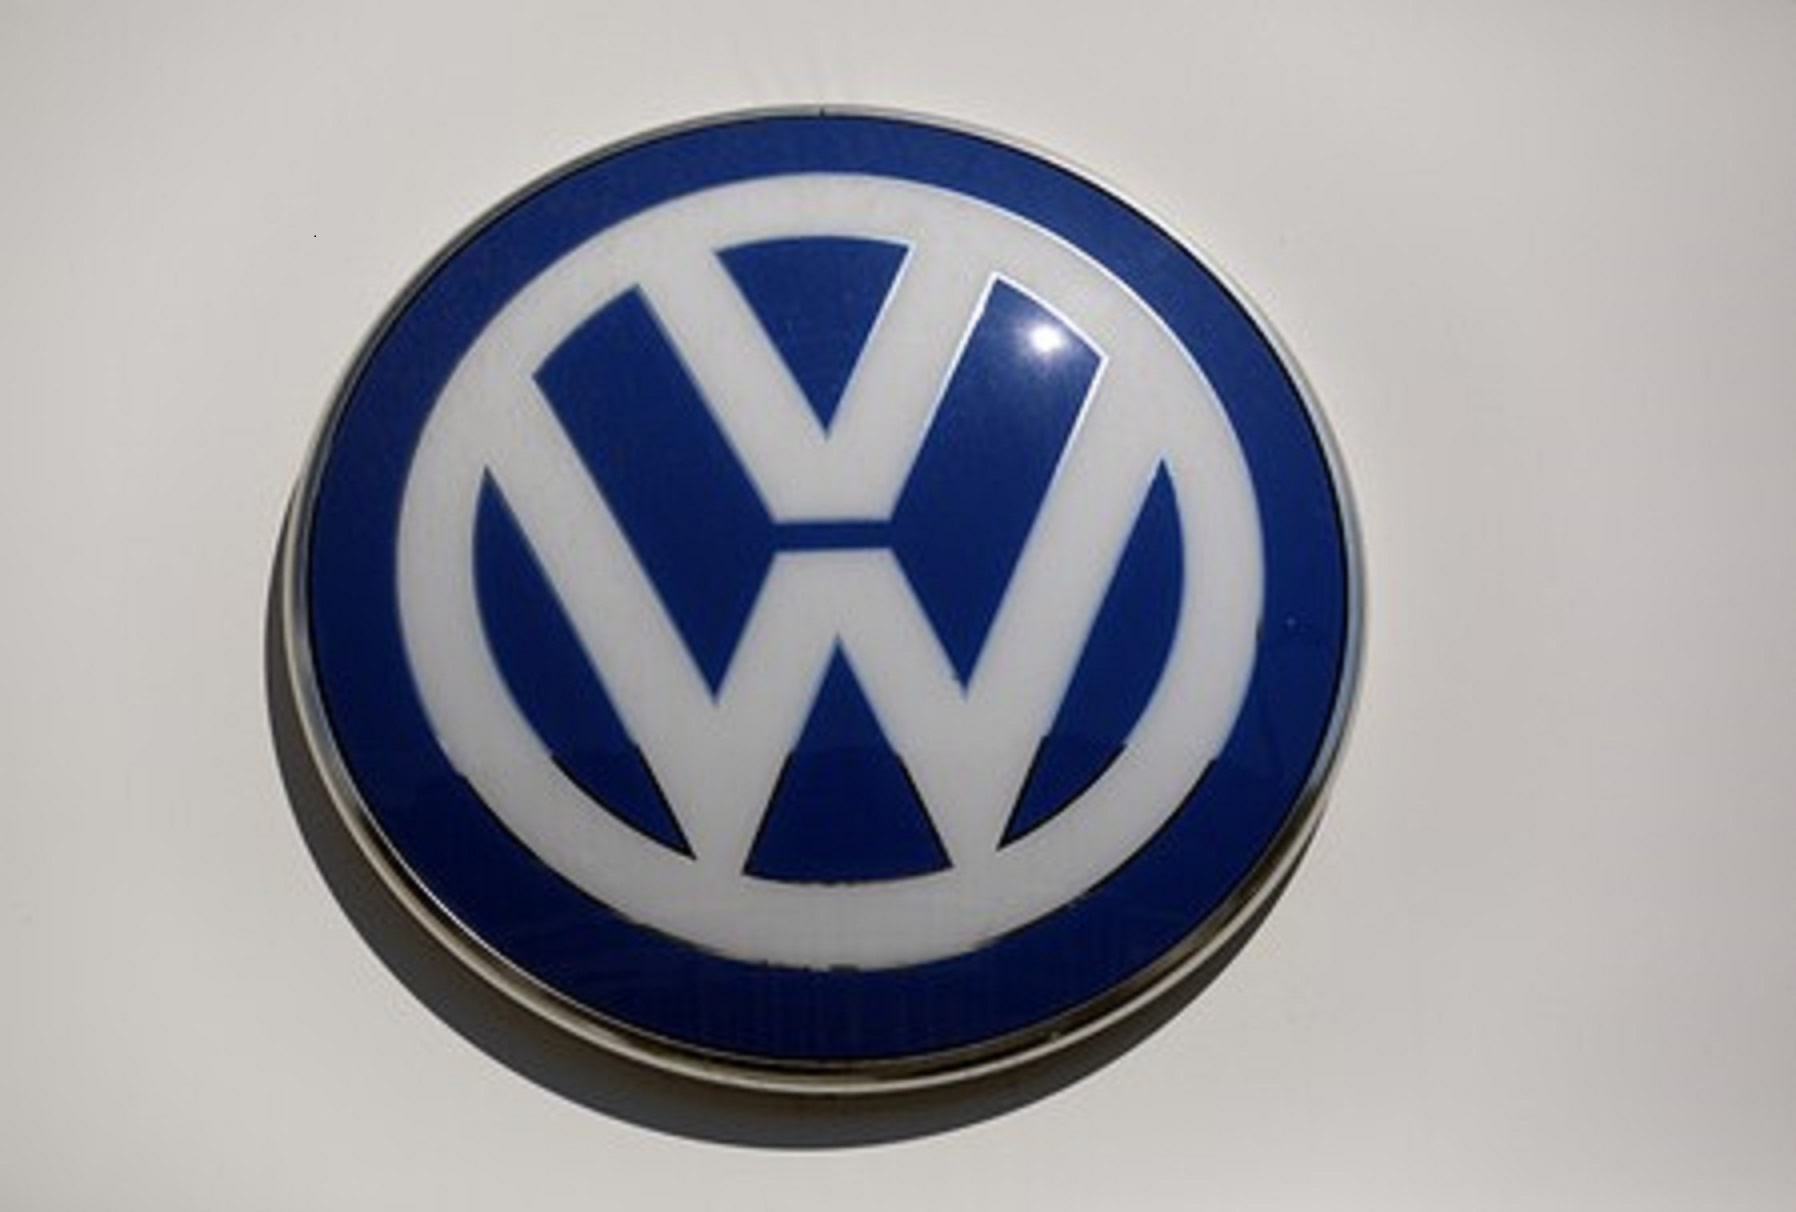 Volkswagen triệu hồi 679.000 xe tại Mỹ do lỗi tự trôi